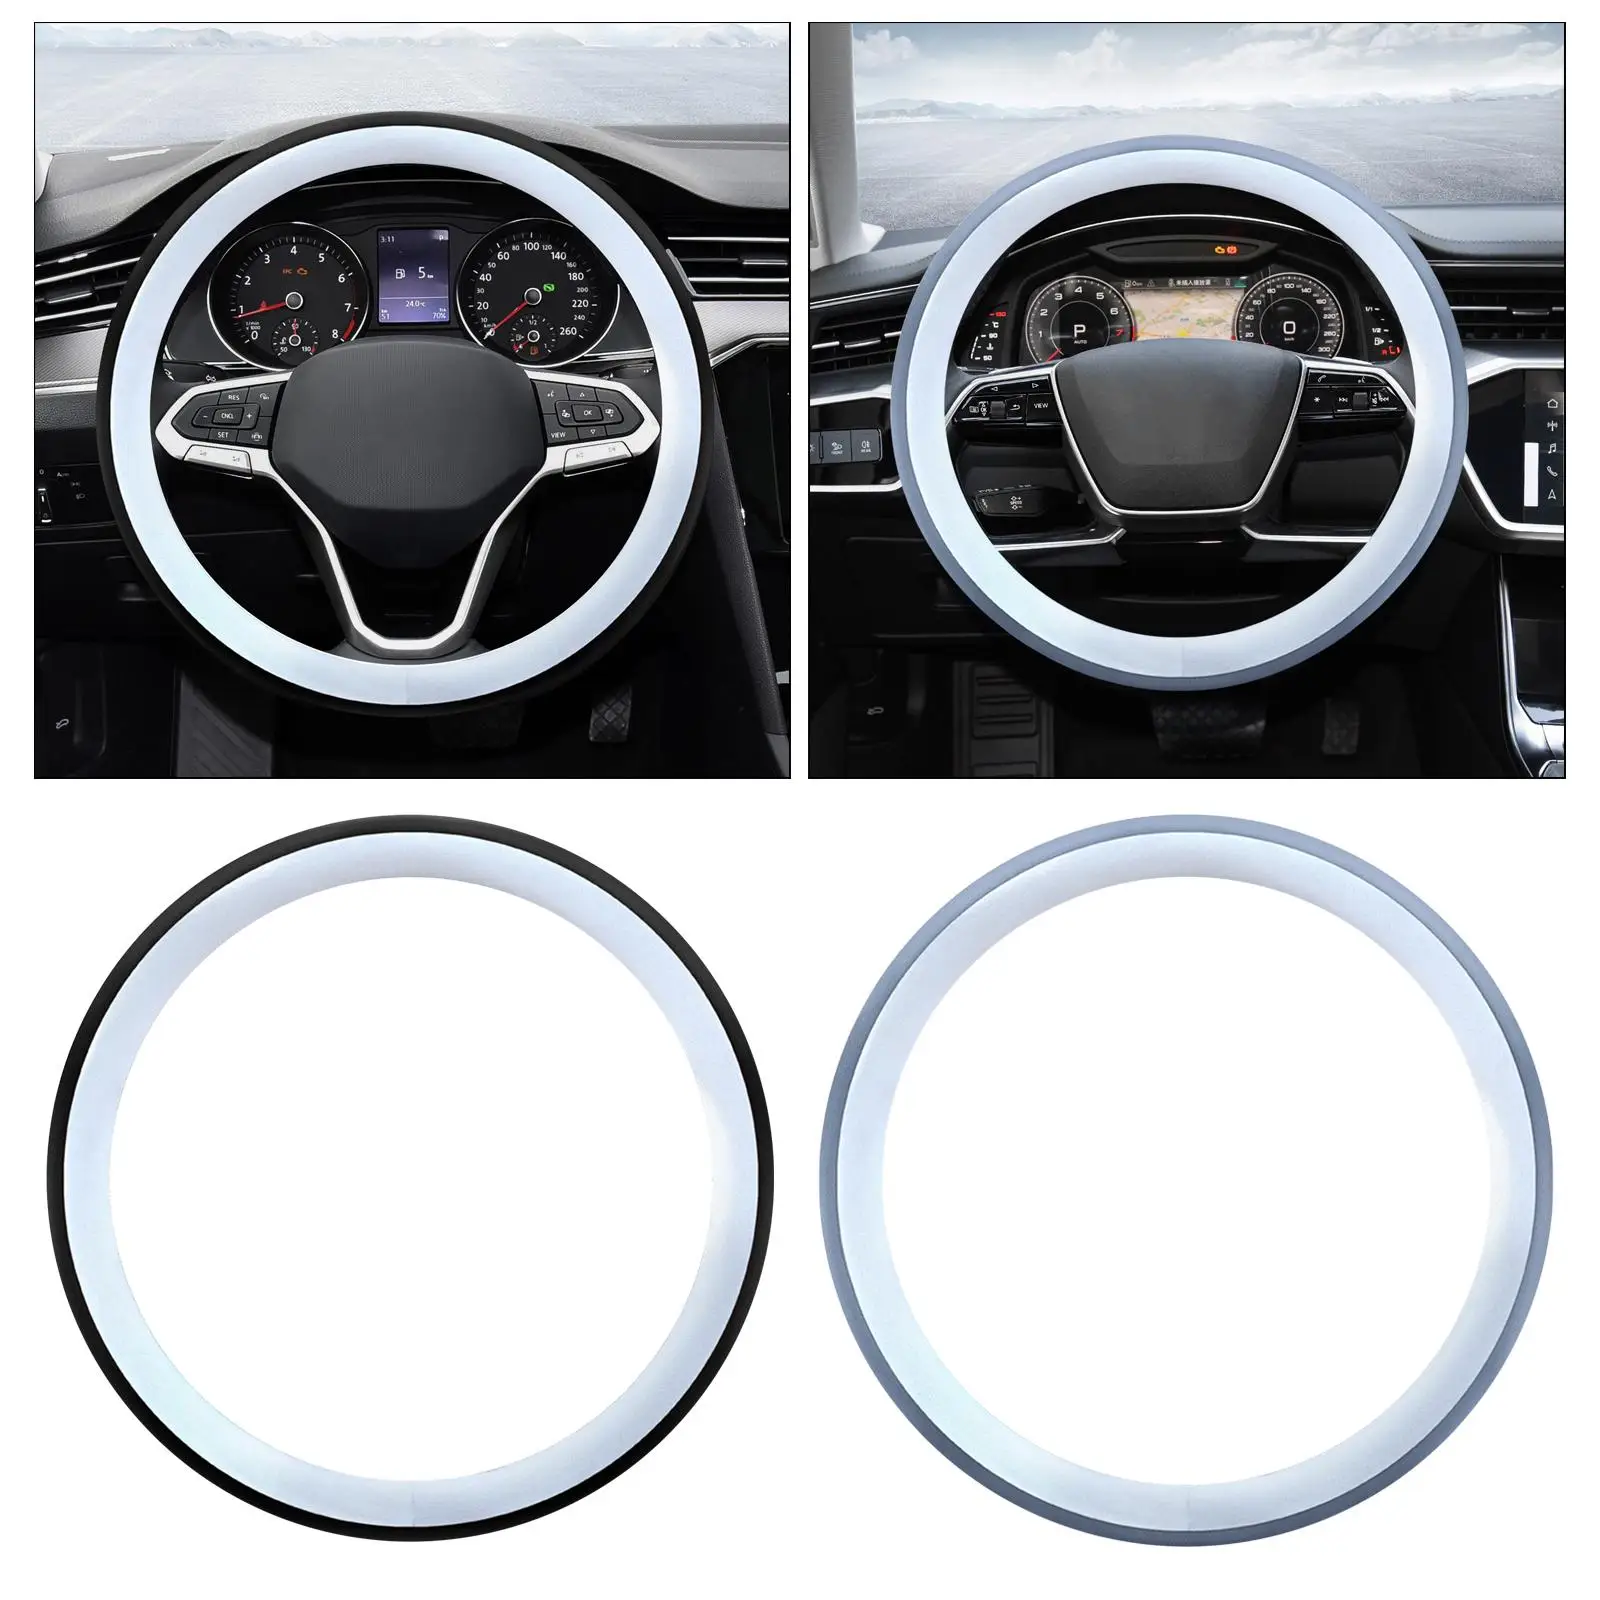 38cm Steering Wheel Cover Protector Interior Accessories Winter for Suvs Trucks Comfortable Universal Wear Resistant Soft Plush